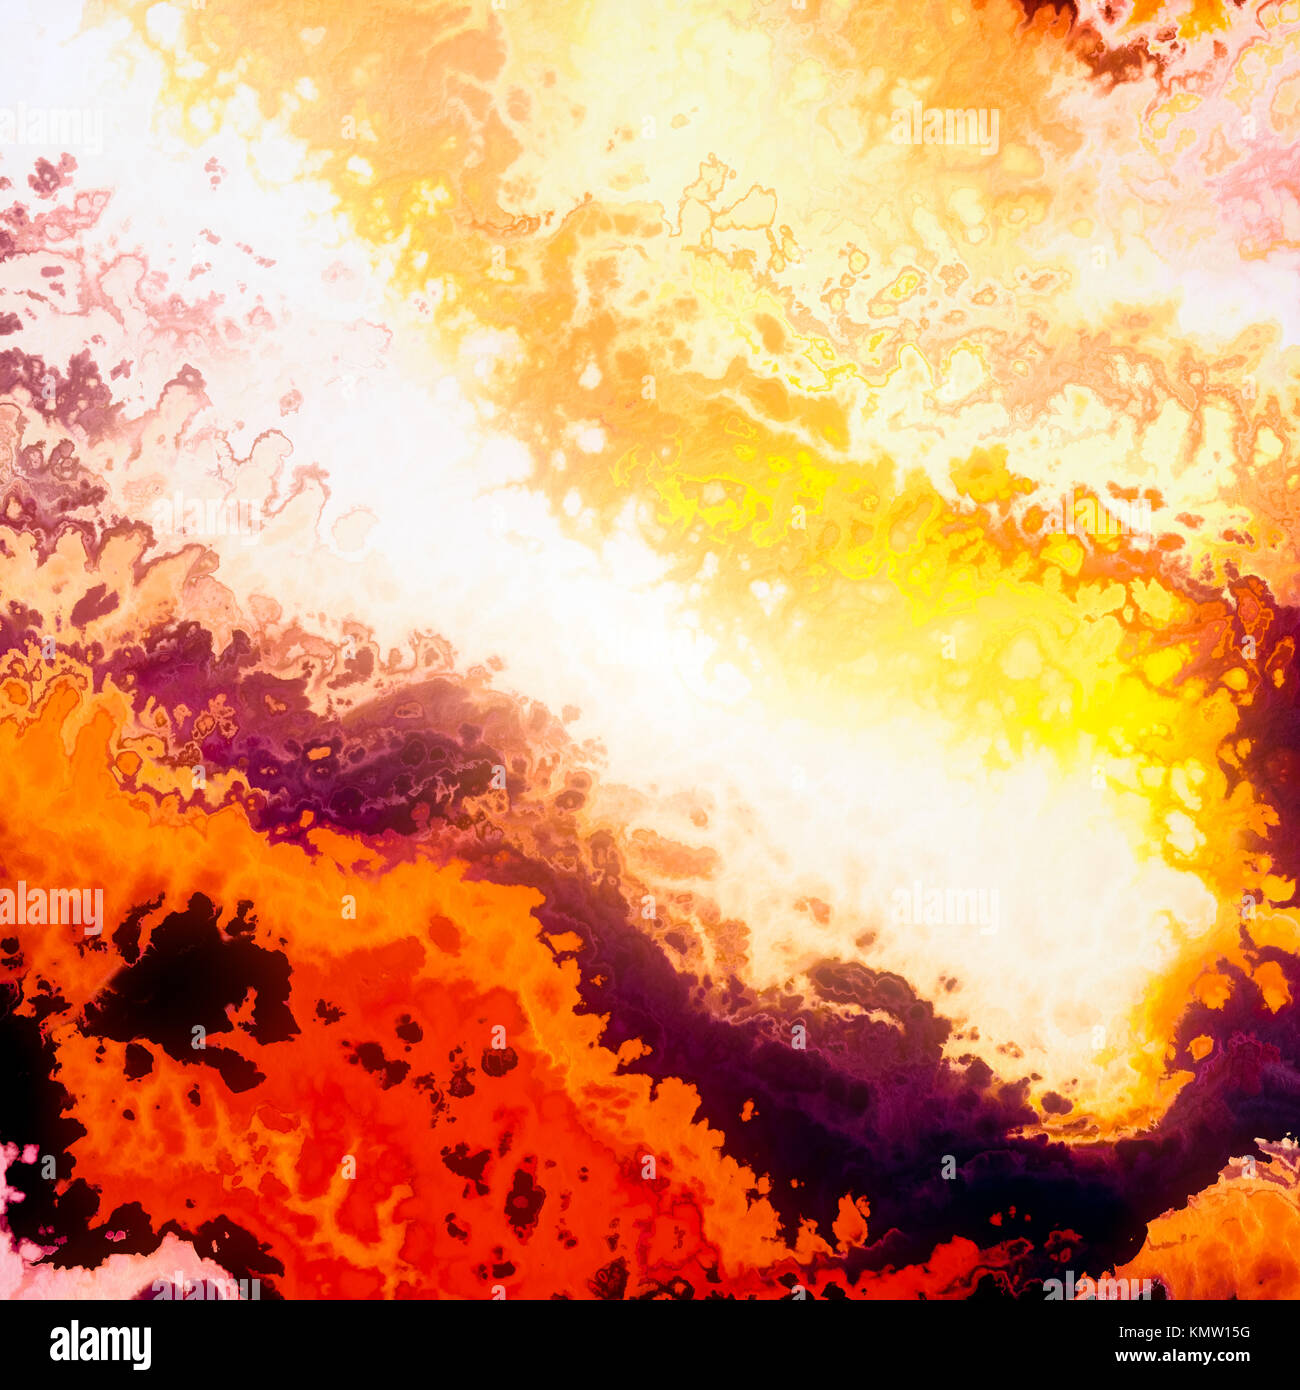 Nuages brûlants, flammes rouges, abstract illustration Banque D'Images